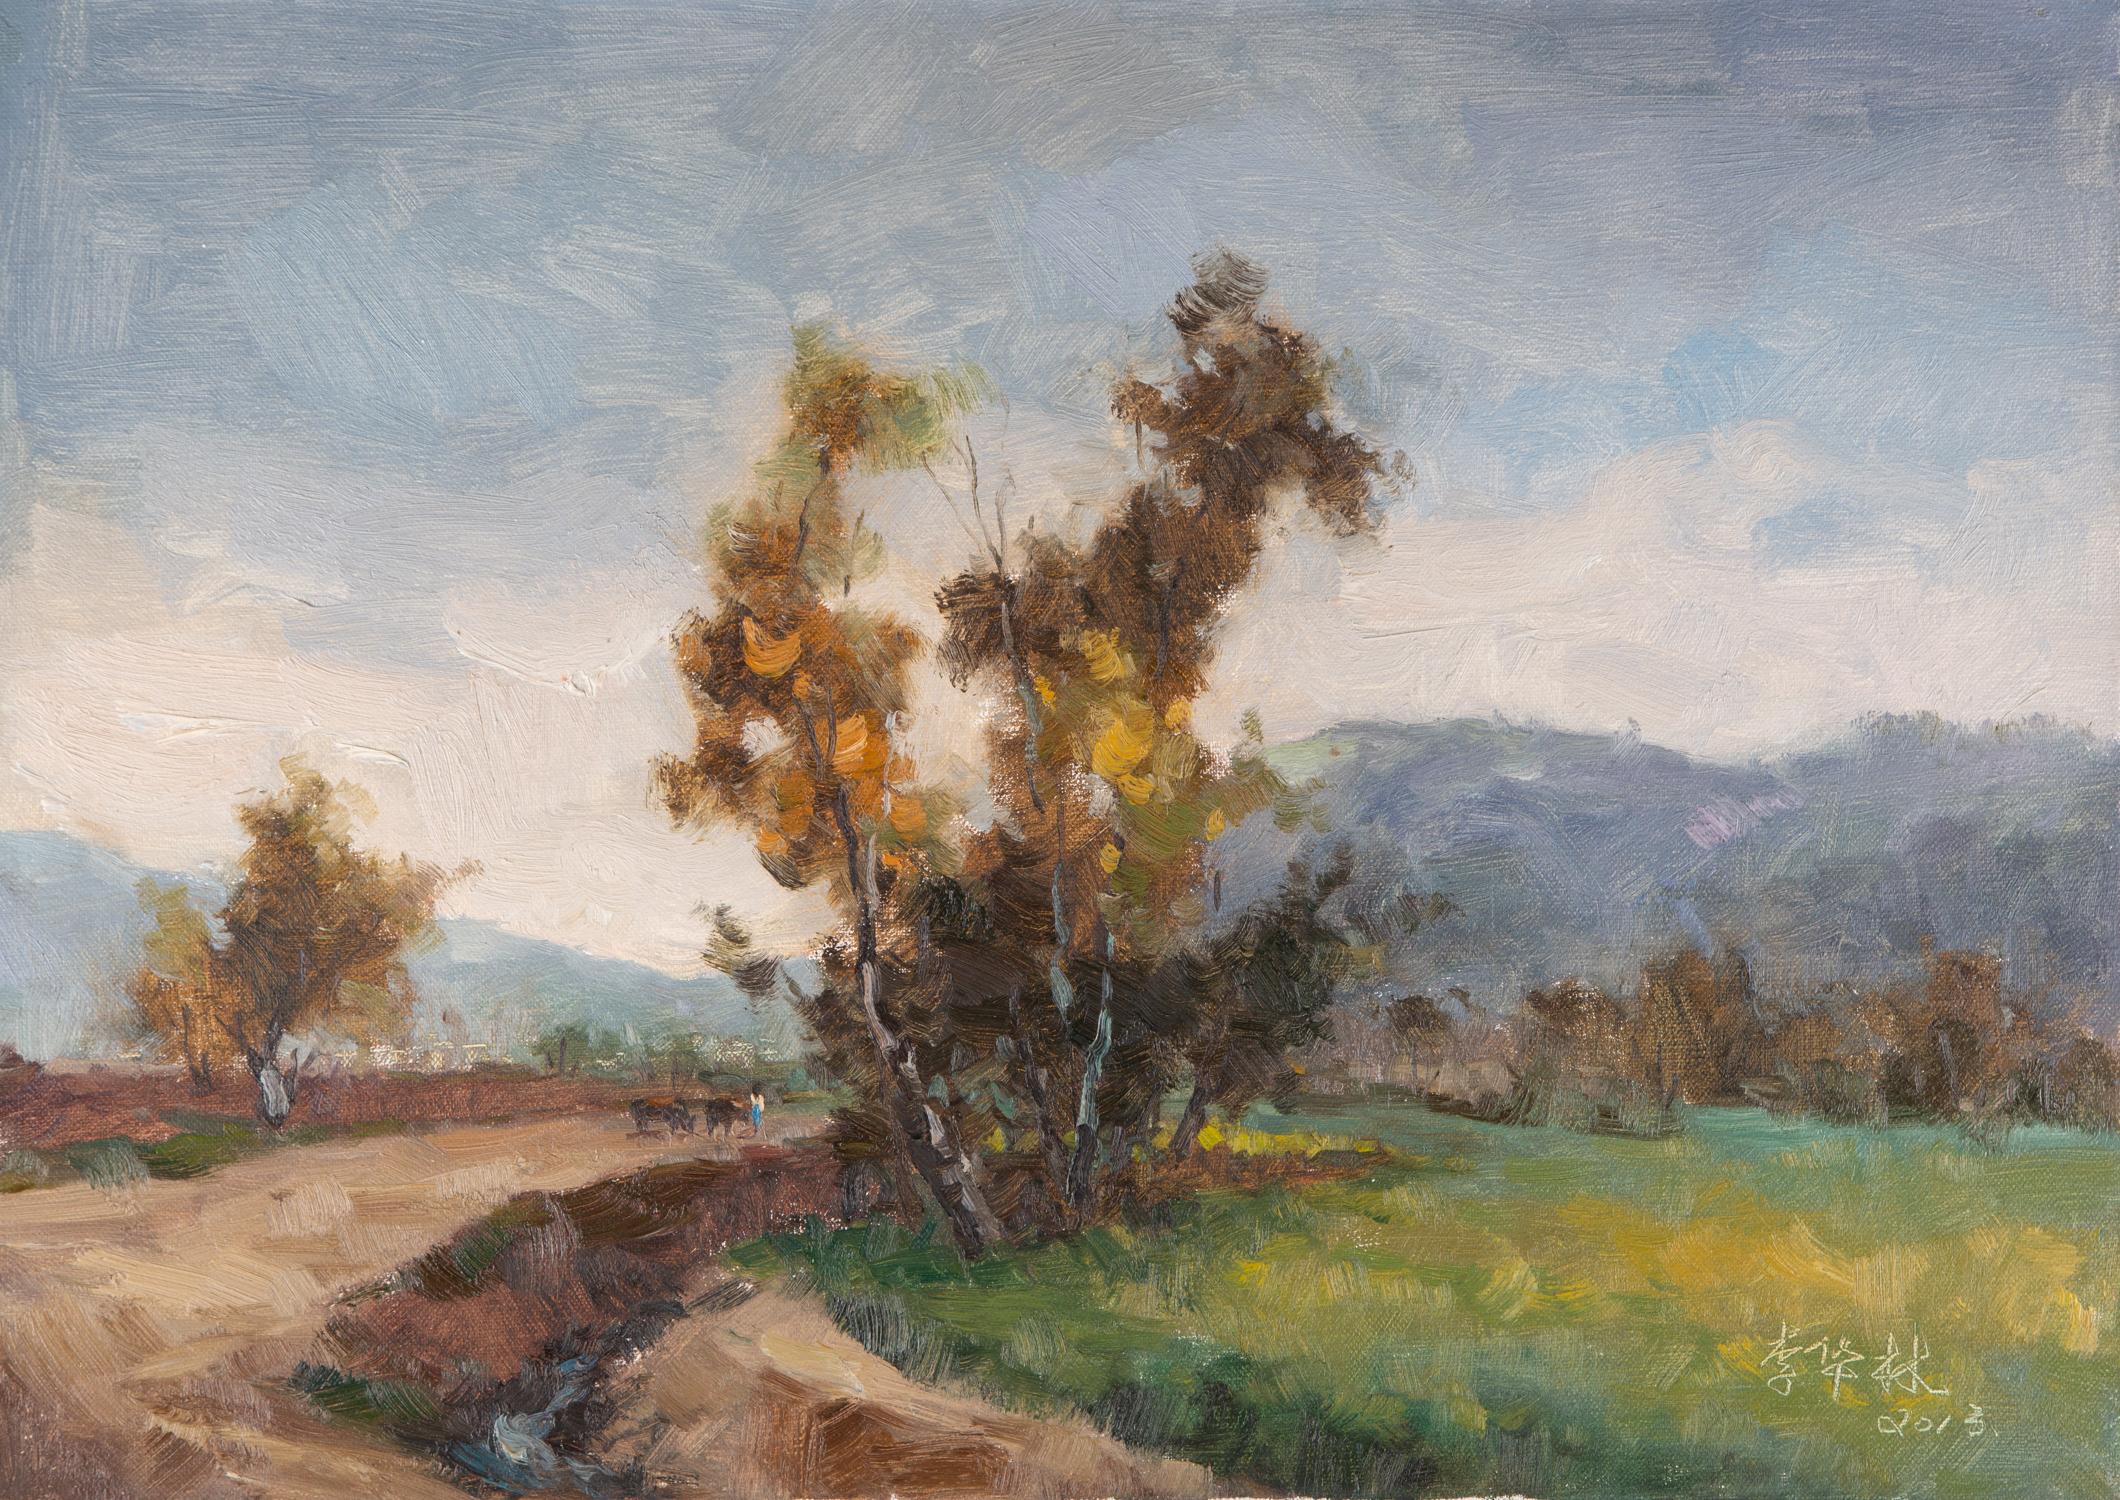 Hualin Li Landscape Painting -  Impressionist Original Oil On Canvas "Countryside"